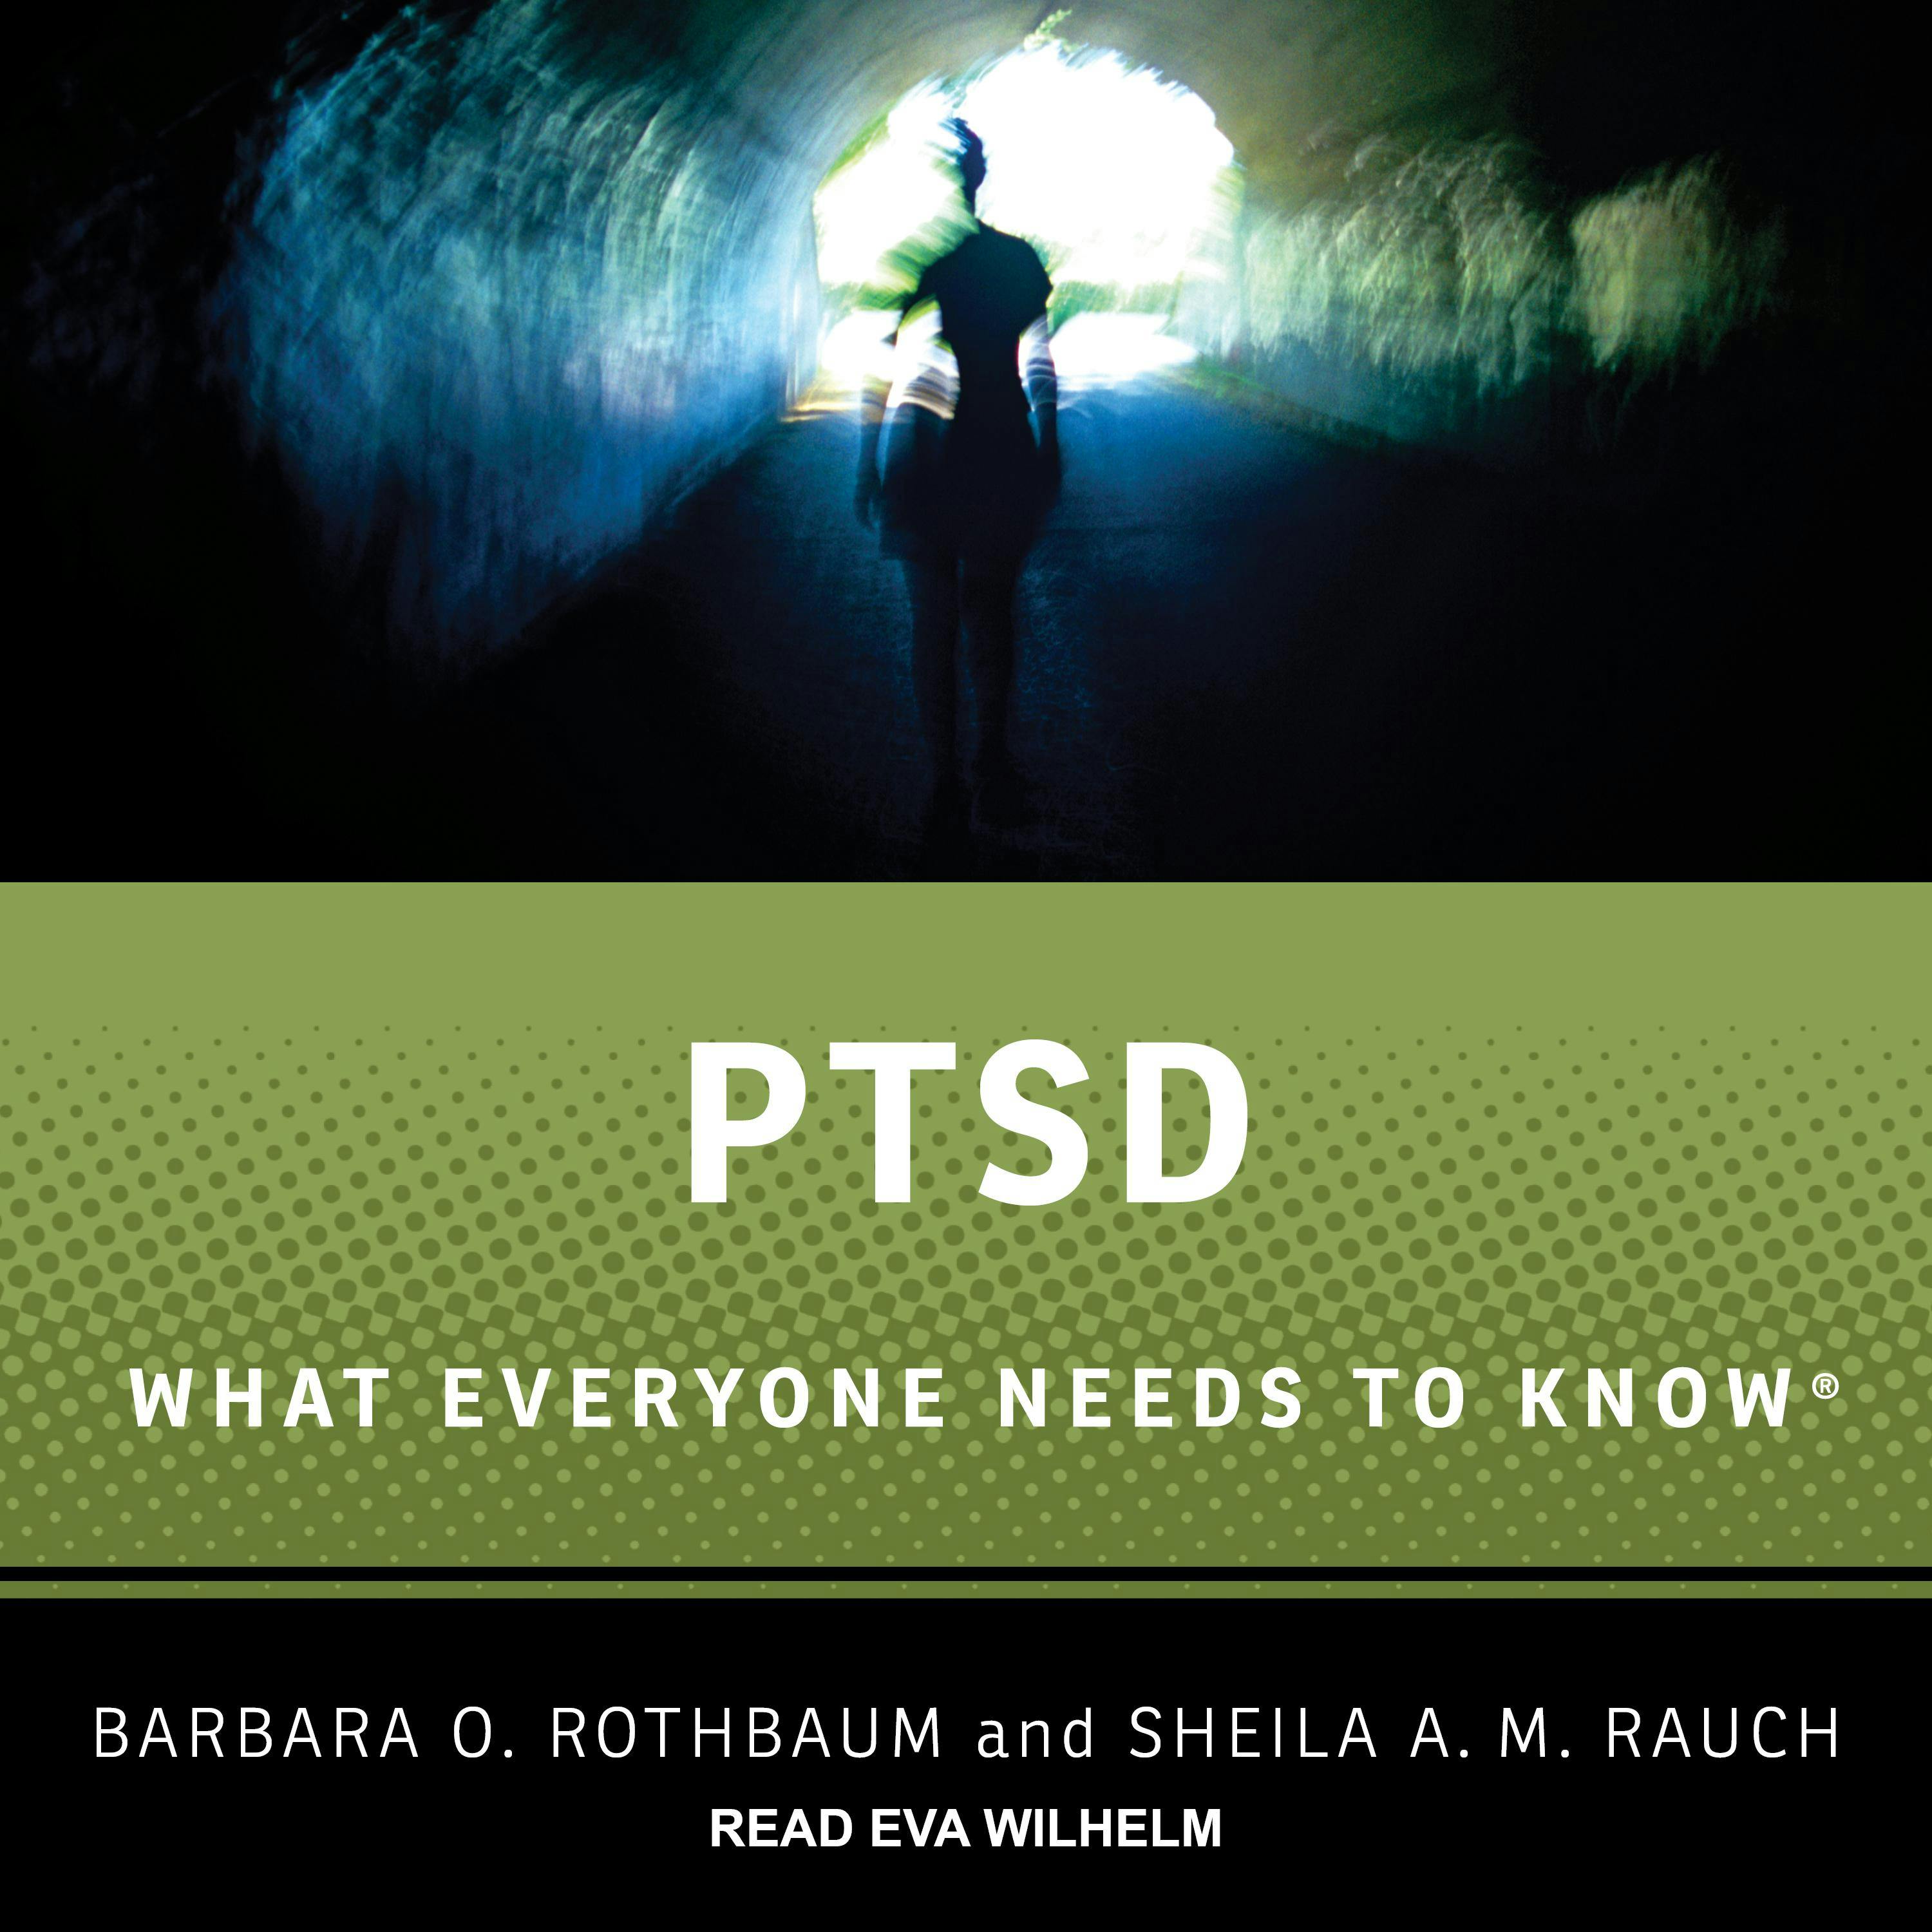 PTSD: What Everyone Needs to Know - Barbara O. Rothbaum, Sheila A.M. Rauch